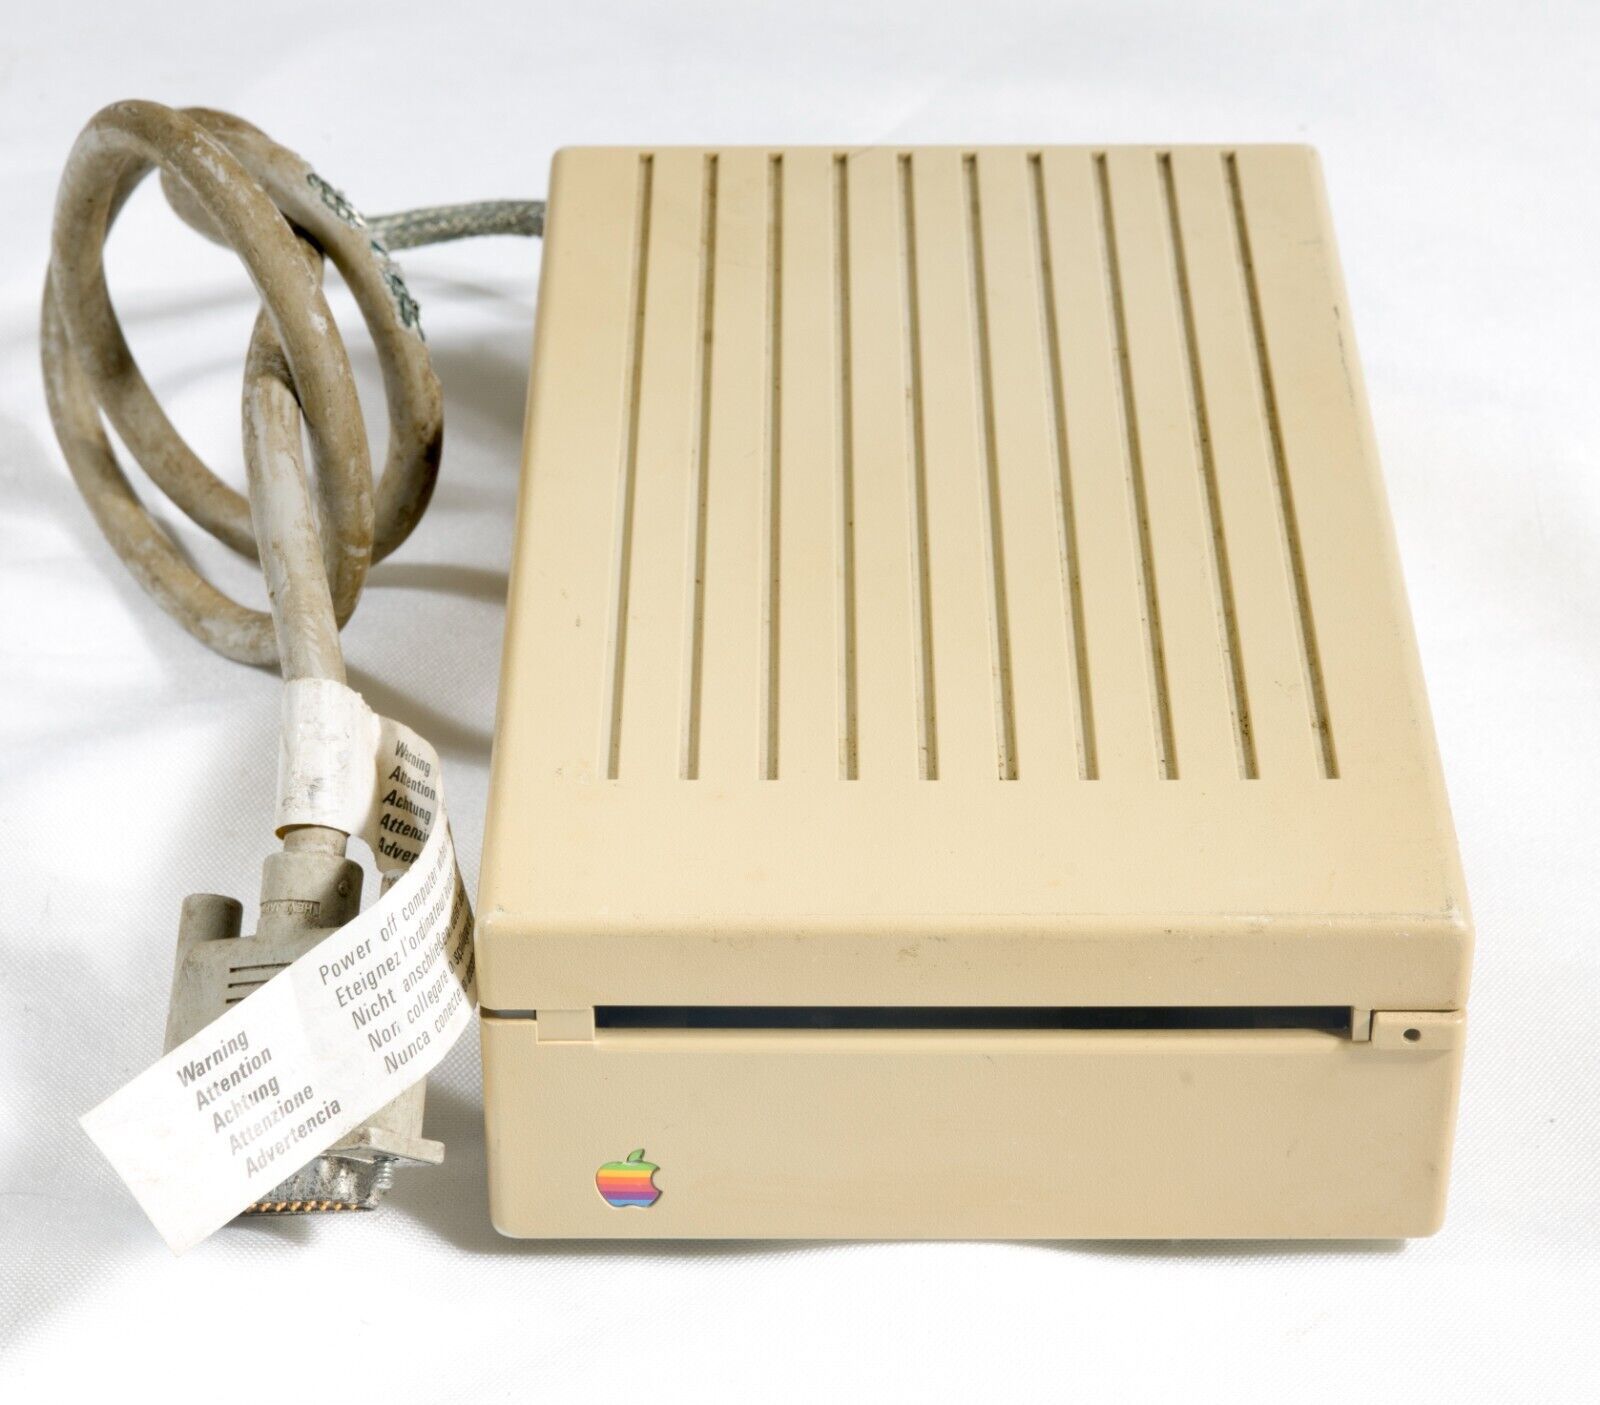 Vintage Apple 3.5 drive A9M0106 External floppy drive parts or repair